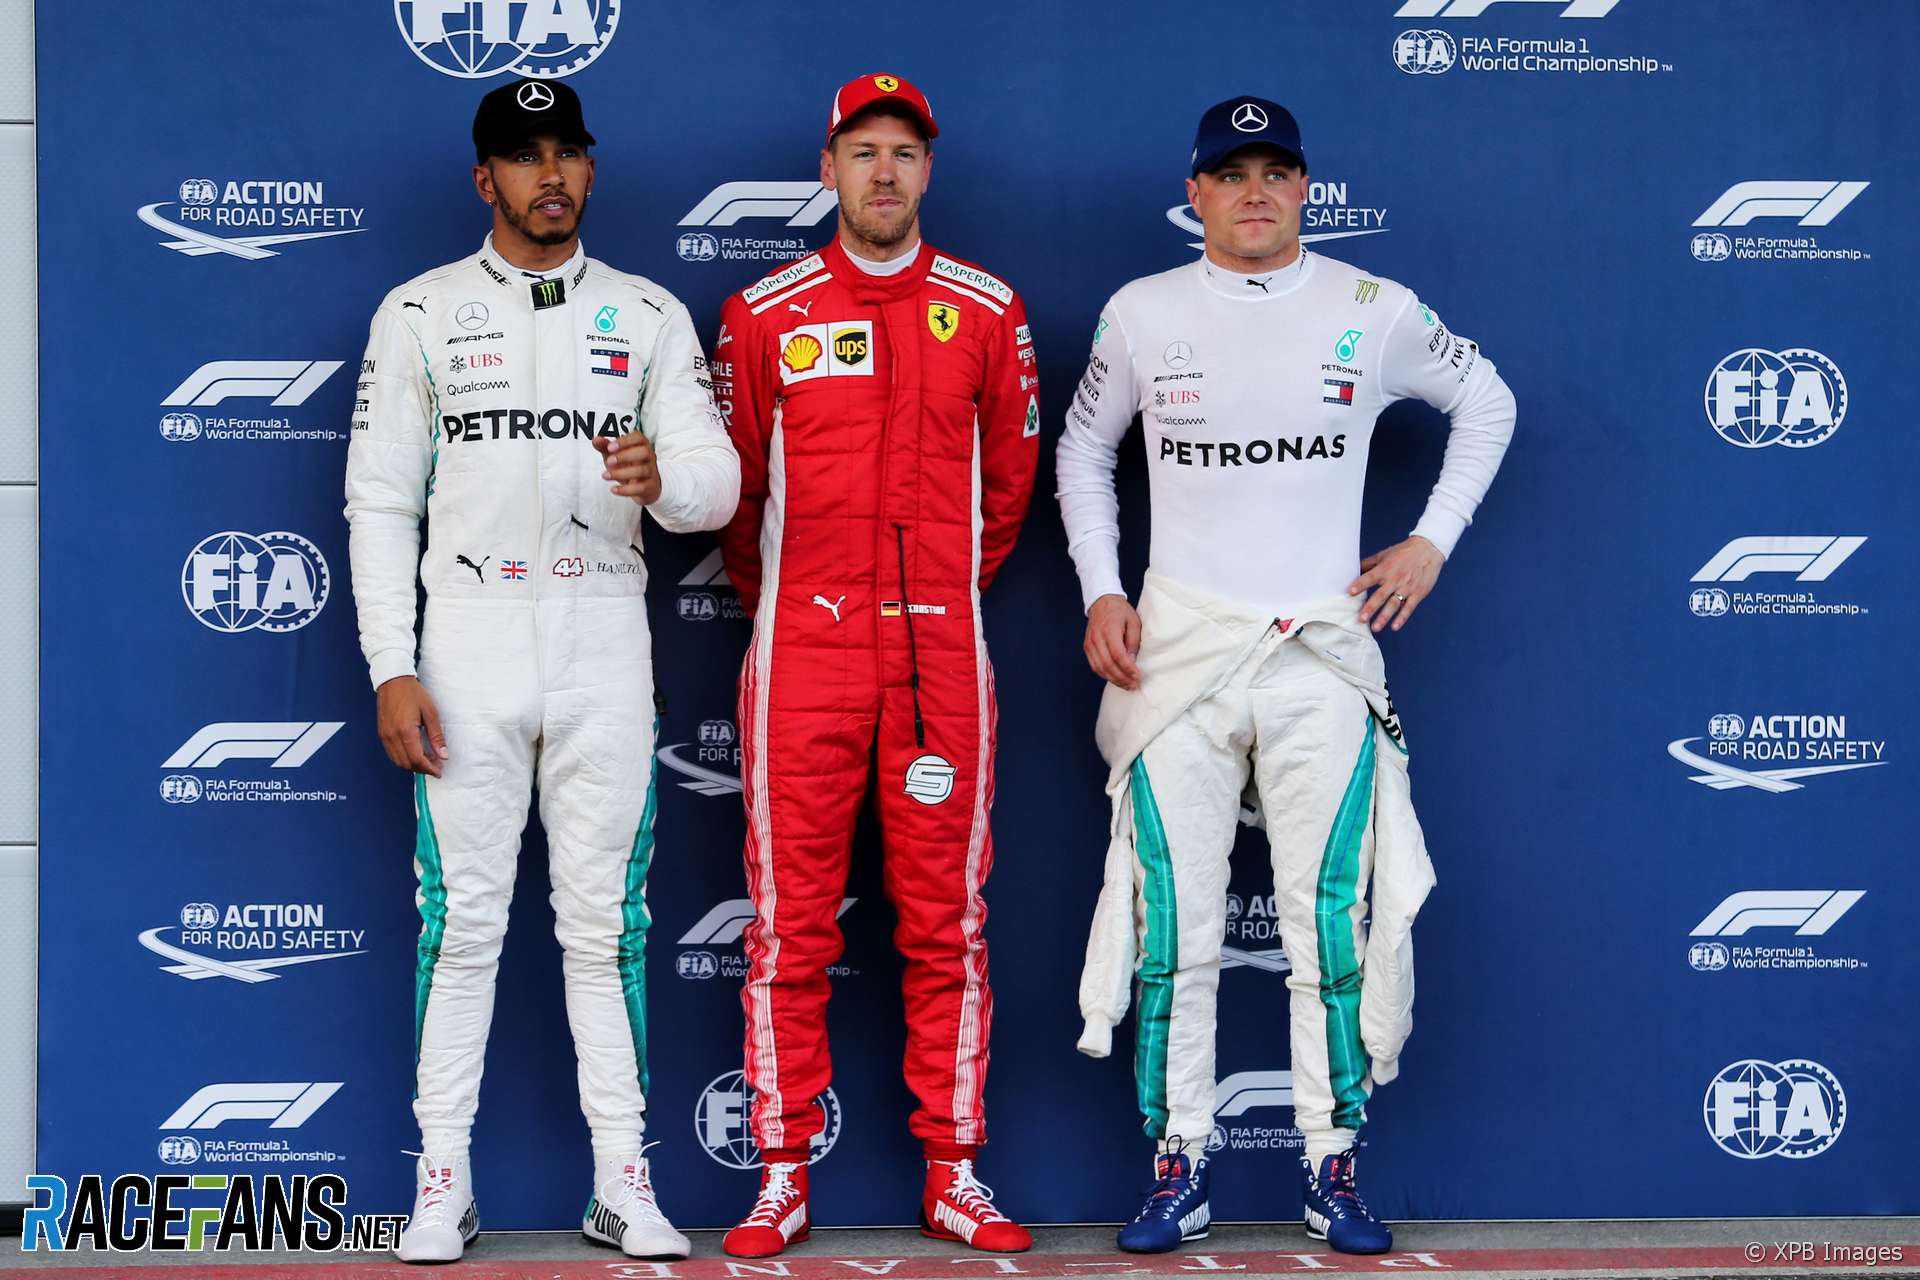 Lewis Hamilton, Mercedes, Baku City Circuit, 2018